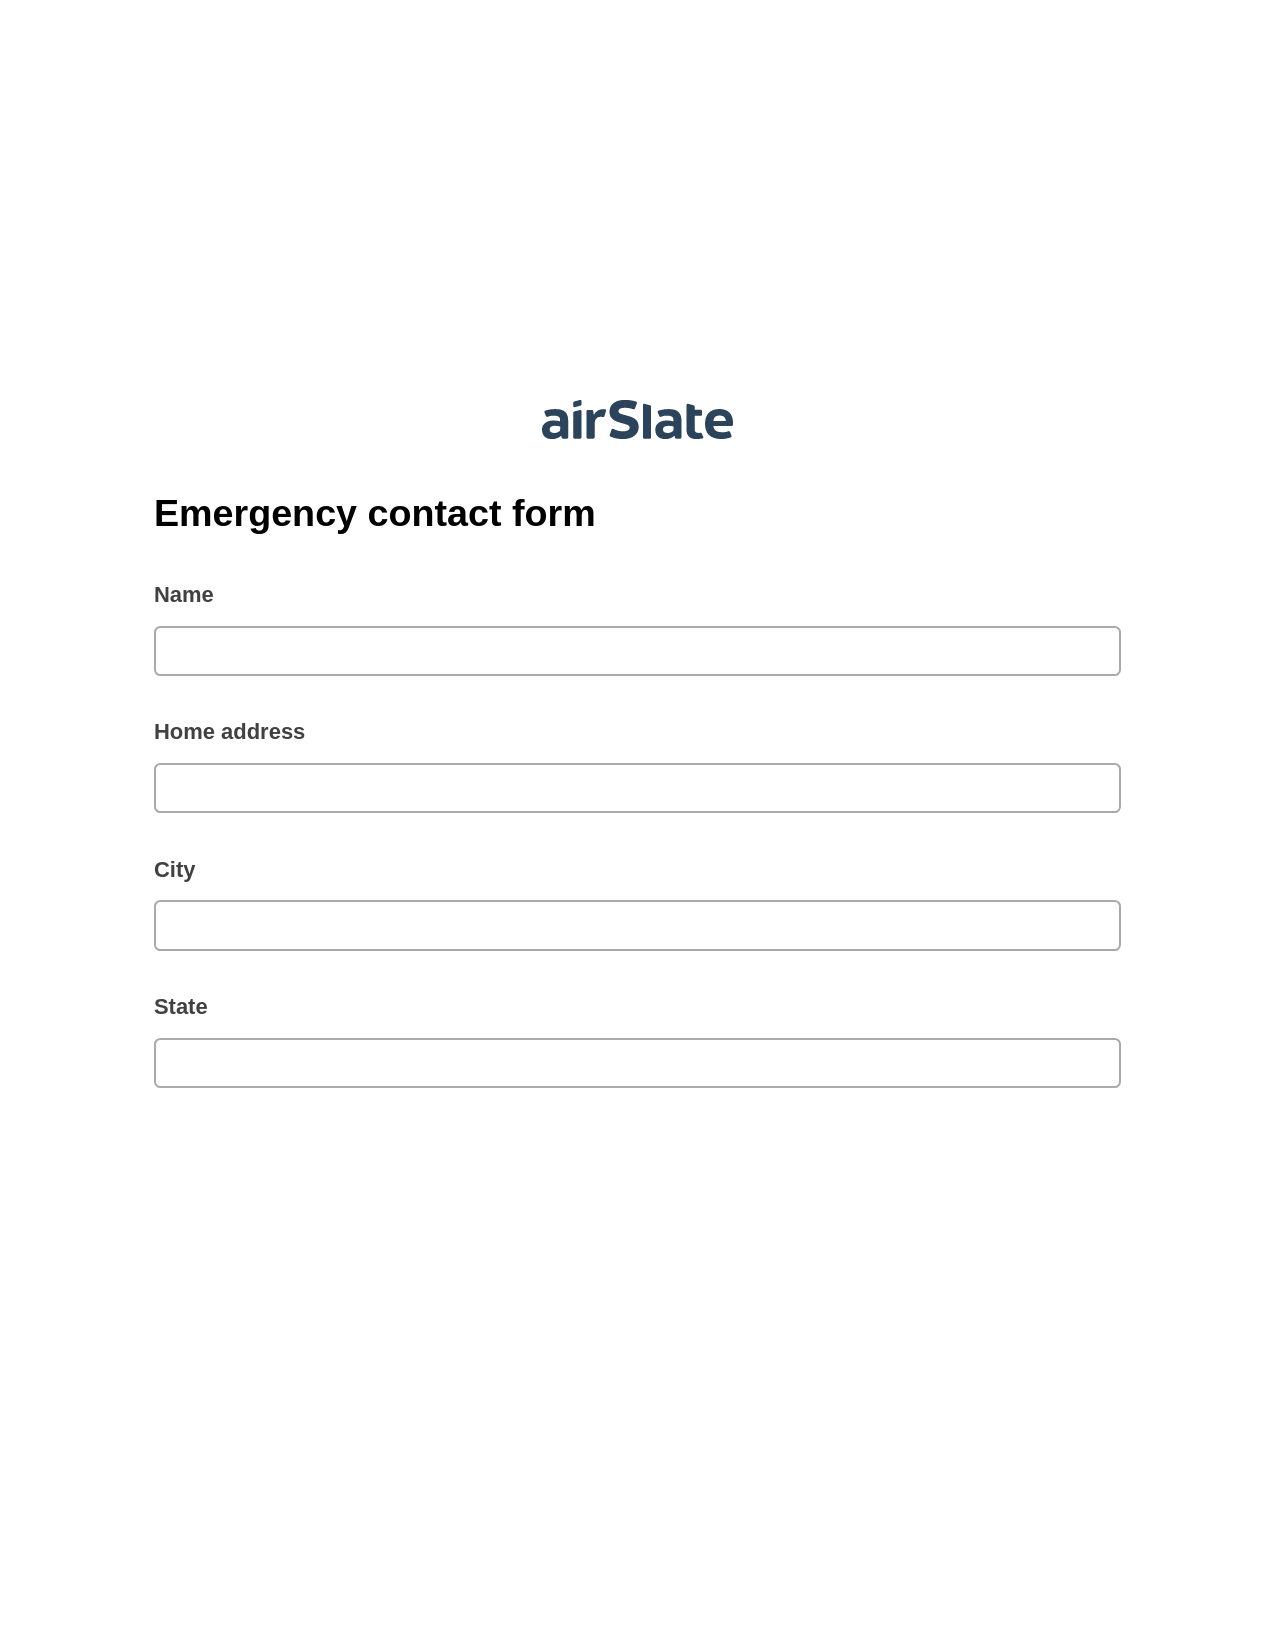 Multirole Emergency contact form Pre-fill Slate from MS Dynamics 365 Records Bot, Google Cloud Print Bot, Slack Two-Way Binding Bot